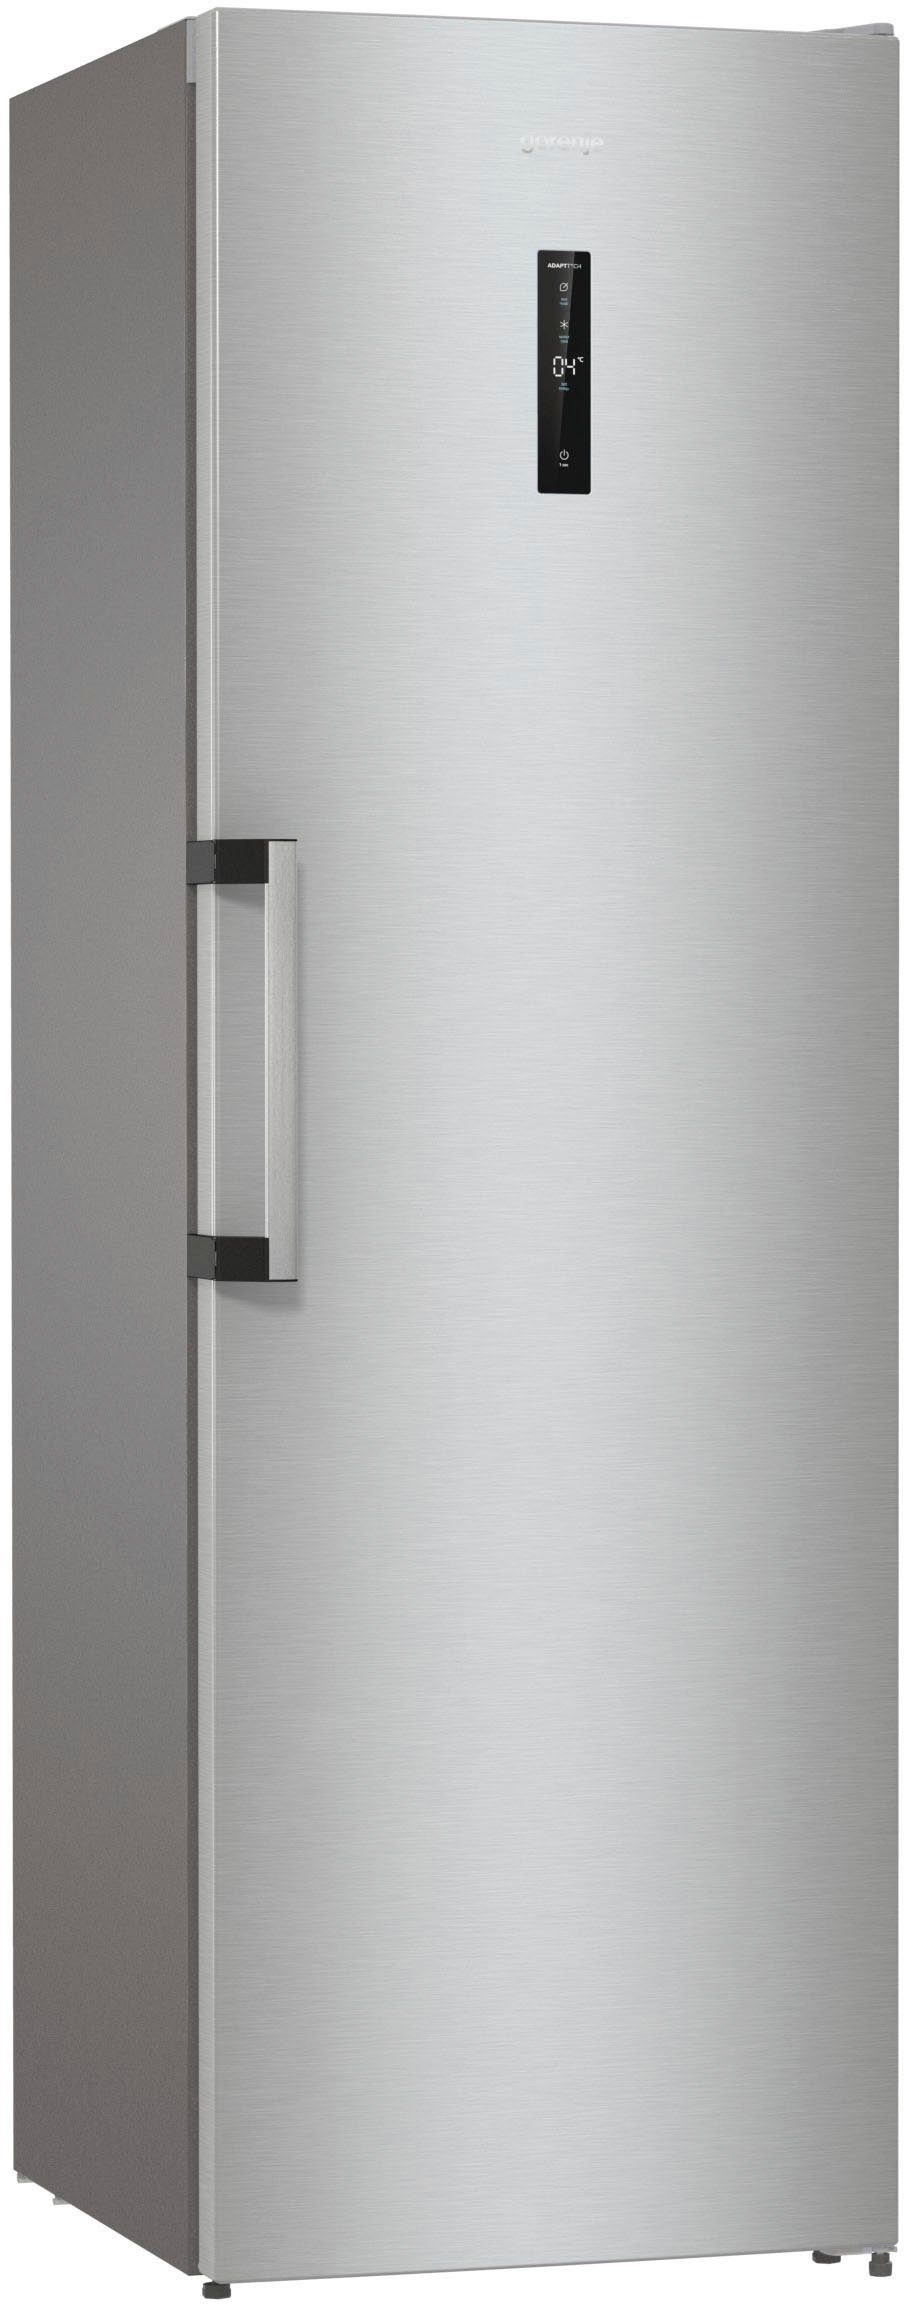 GORENJE Kühlschrank R619DAXL6, 185 cm hoch, 59,5 cm breit grau metallic